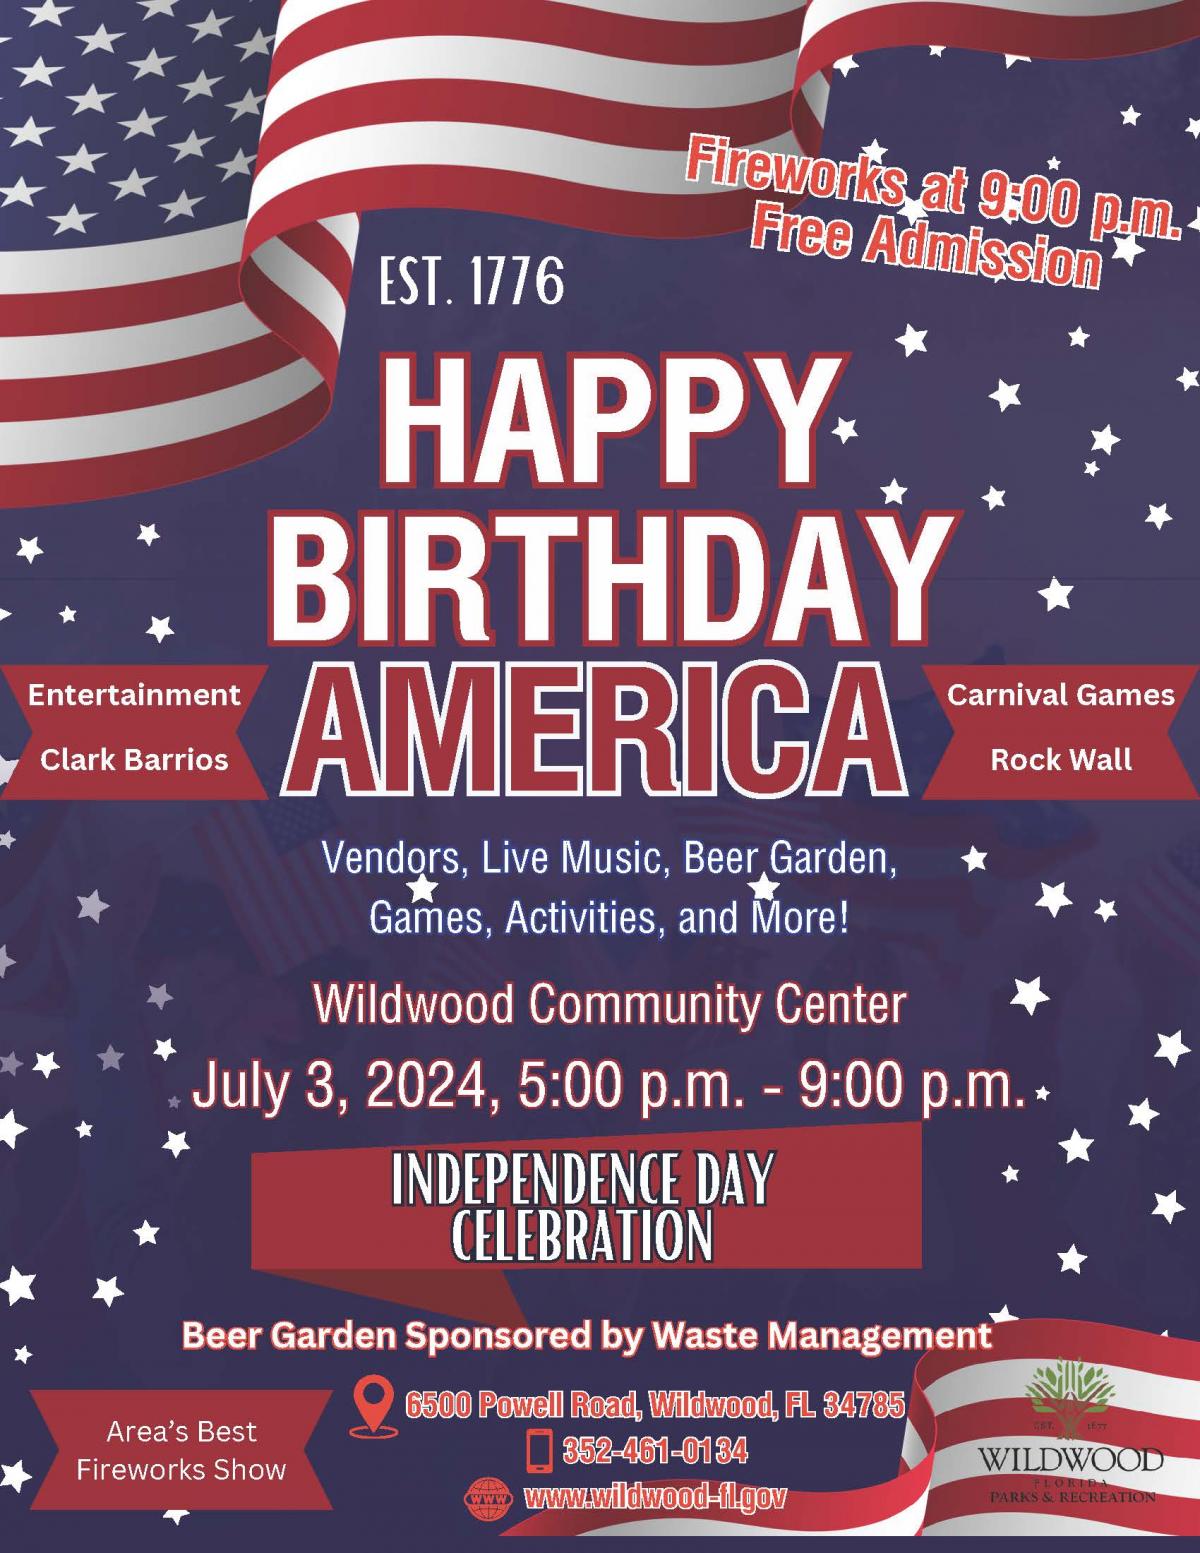  Happy Birthday America, Wednesday, July 3, 2024, Wildwood Community Center, 6500 Powell Road, 5:00 p.m.-9:00 p.m.